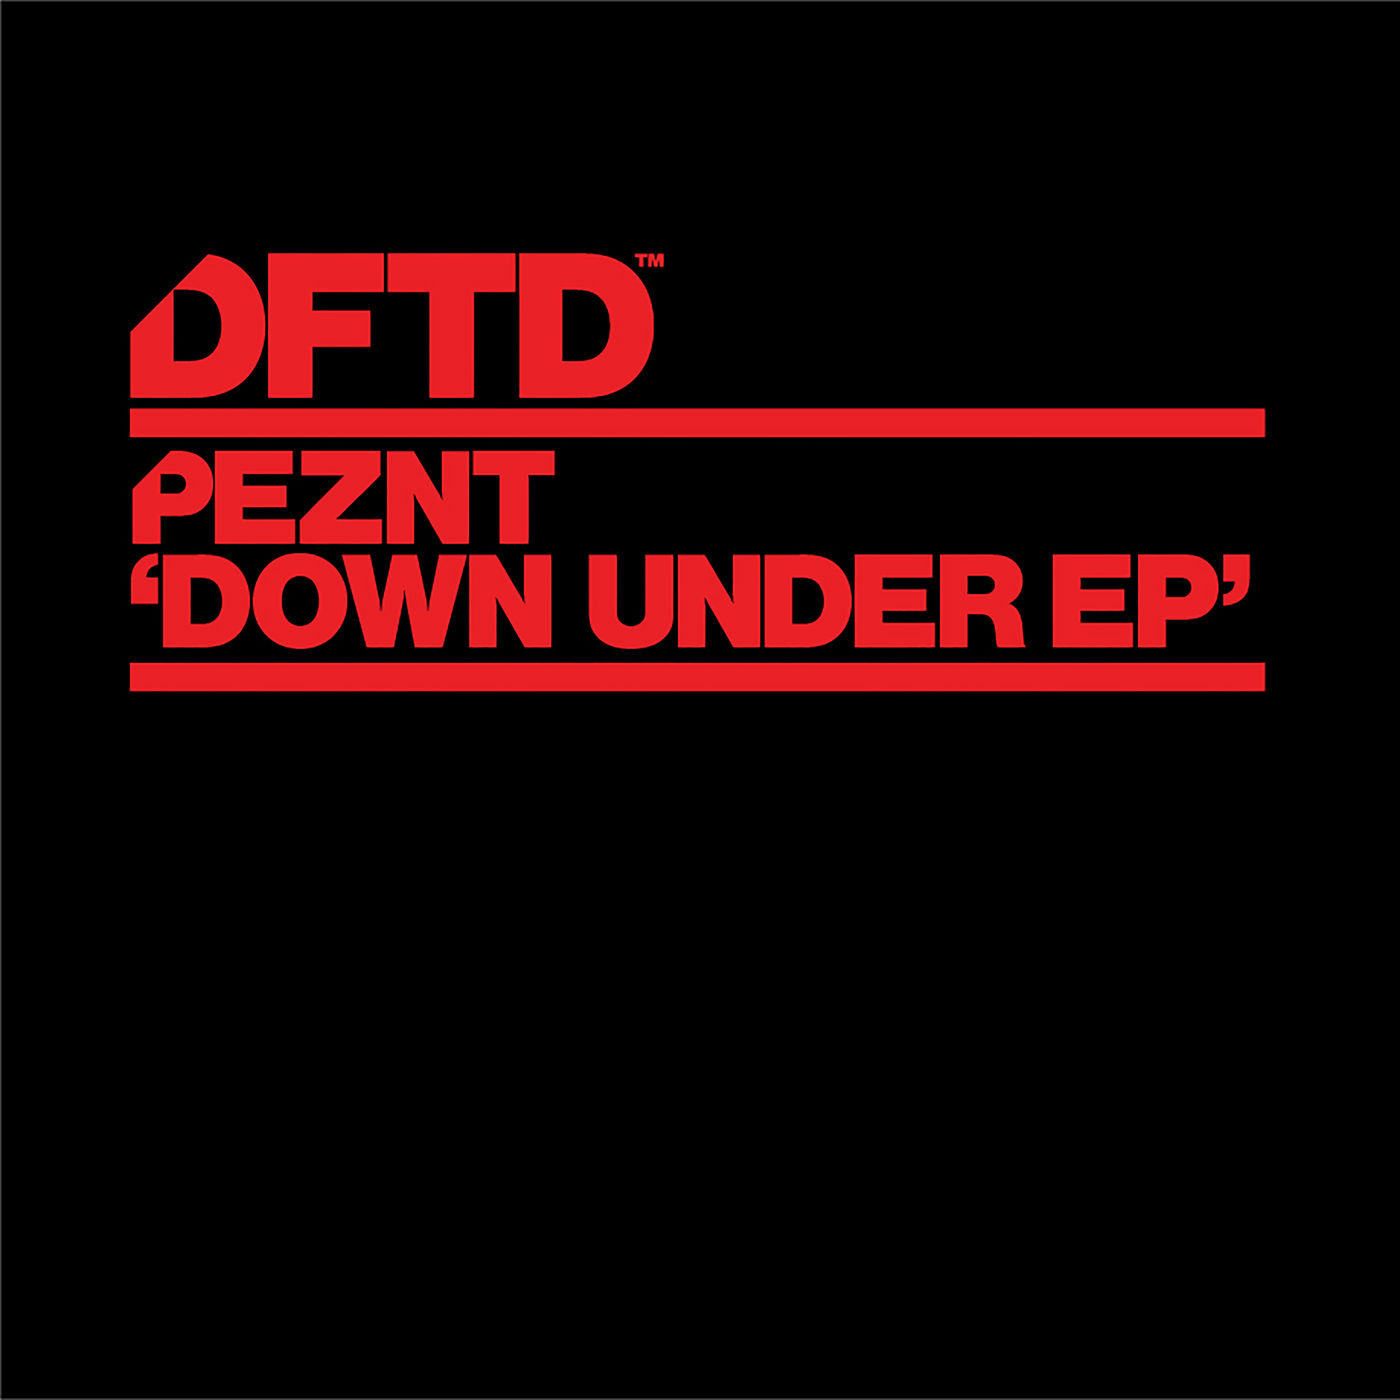 PEZNT - Down Under EP / DFTD